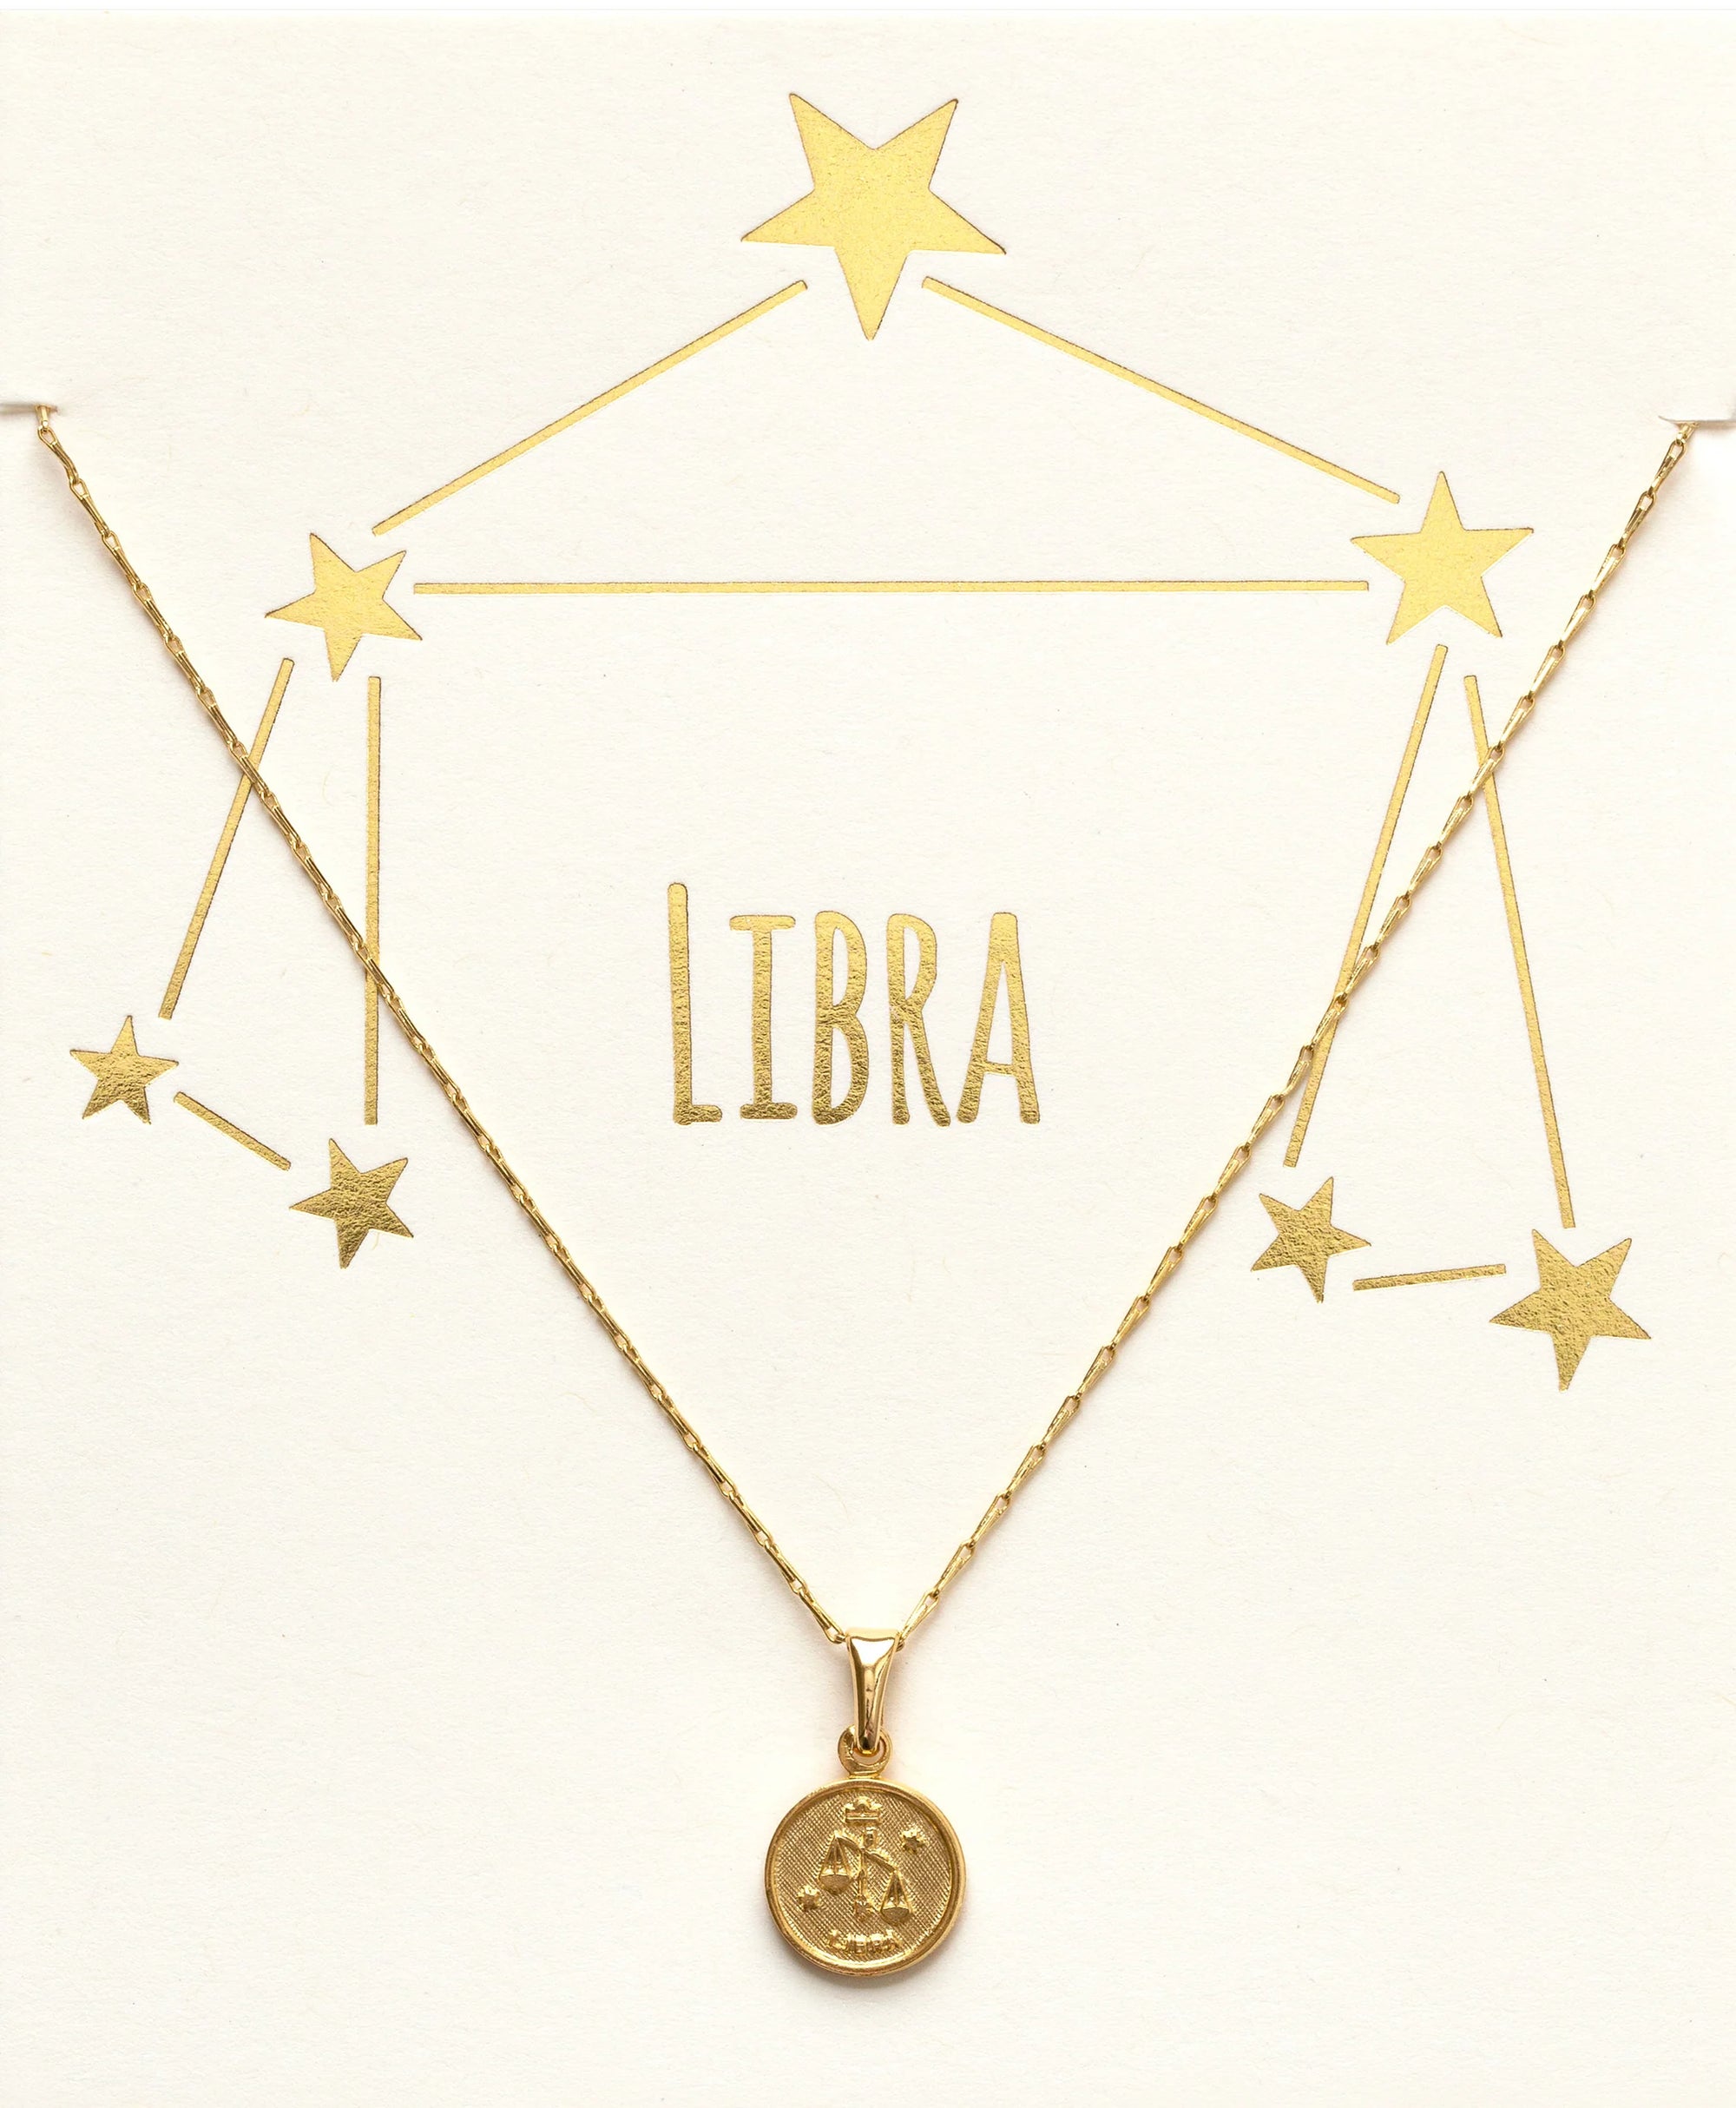 Tiny Zodiac Medallion Necklace